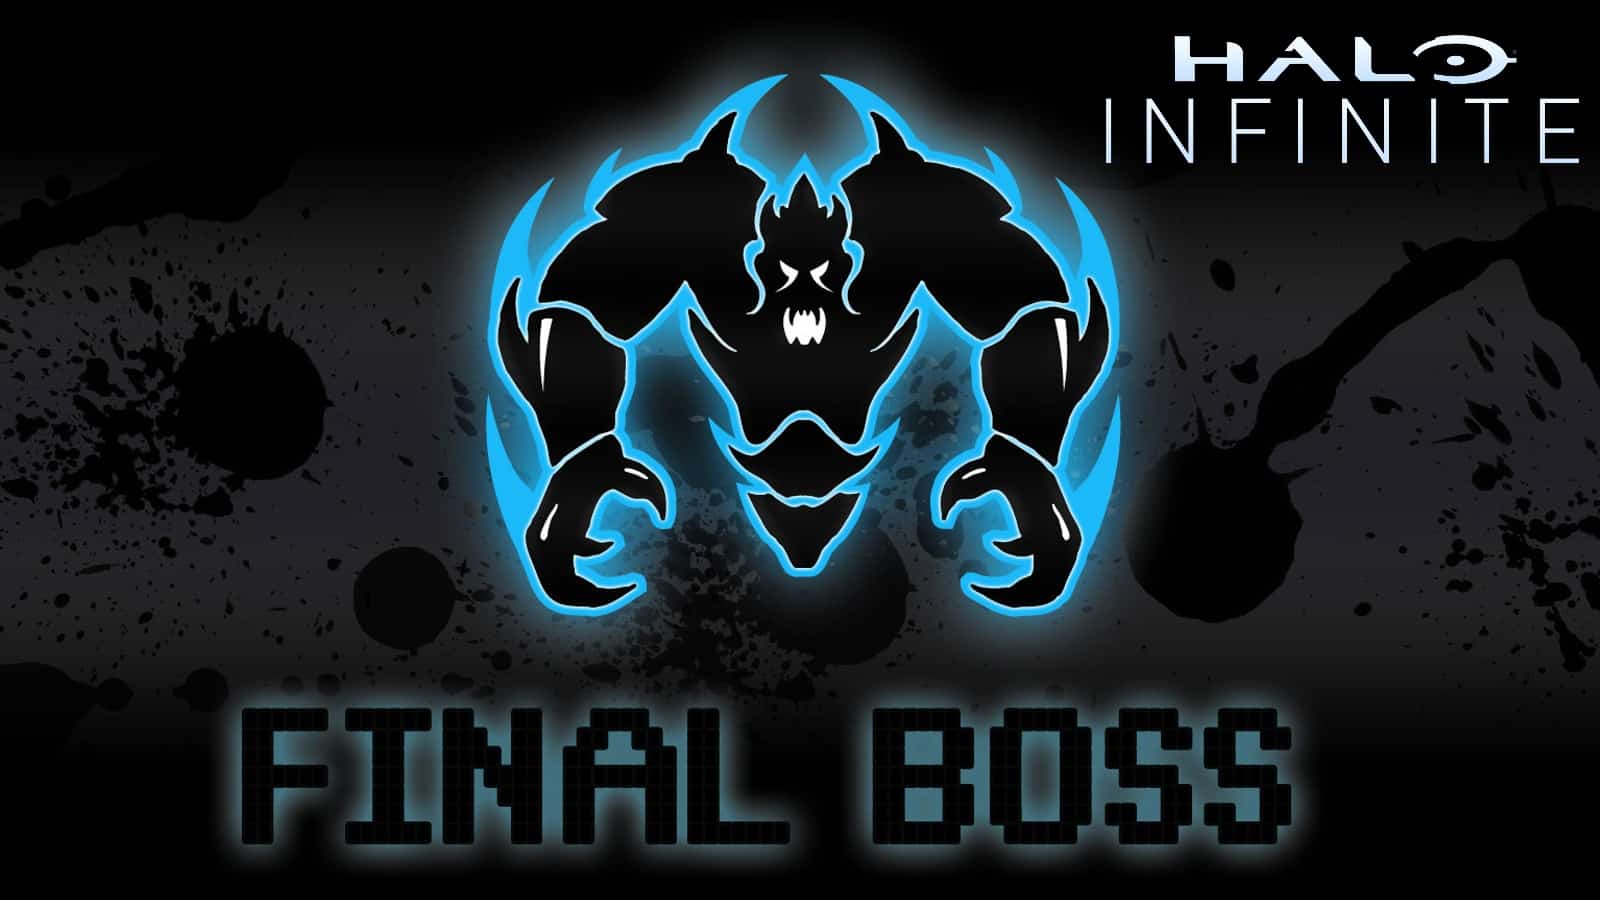 Final Boss Halo Infinite logo